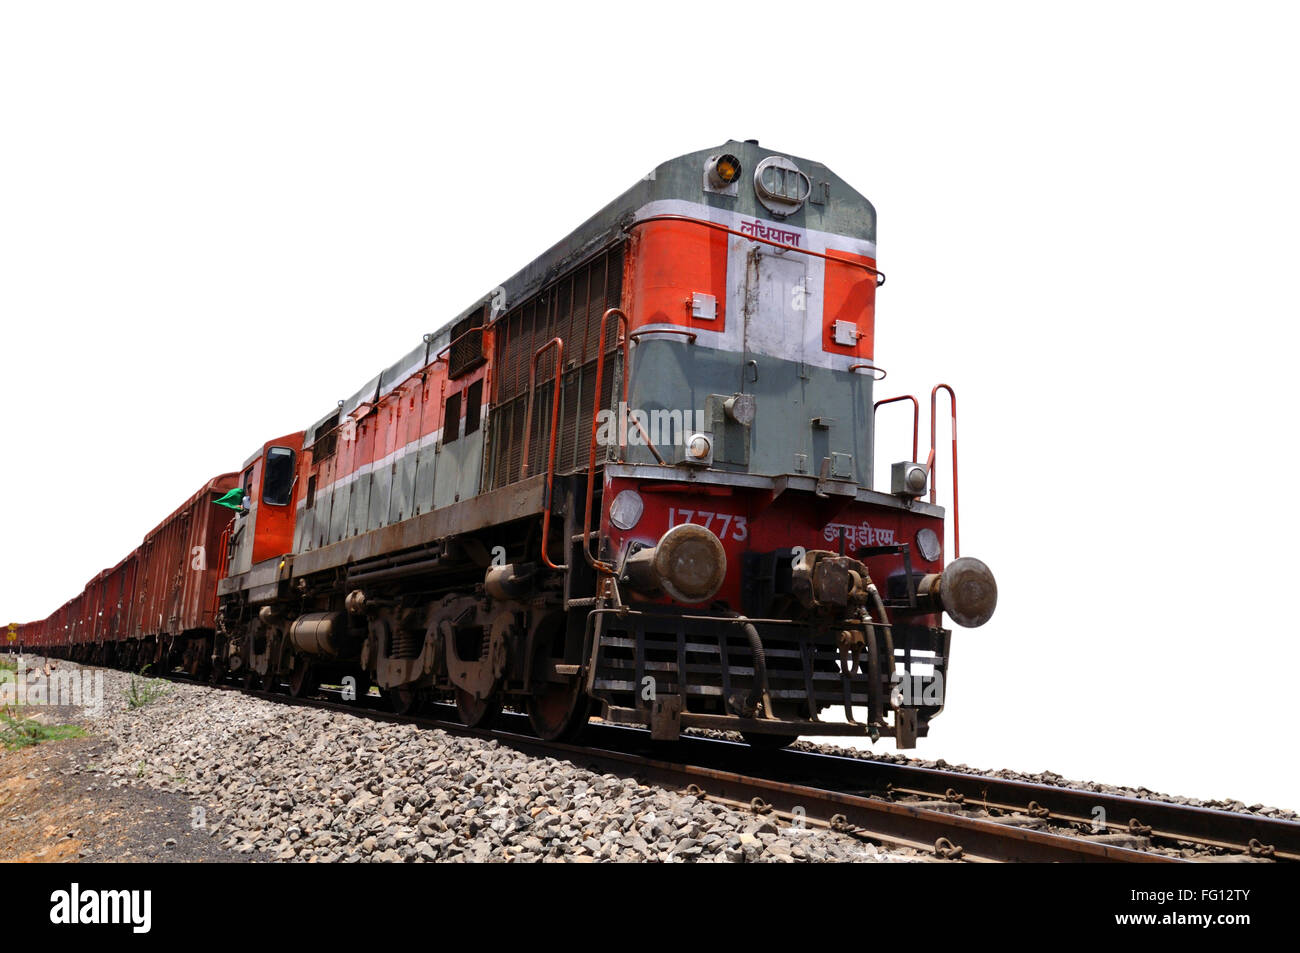 Goods train engine on railway track against white background of sky India Stock Photo